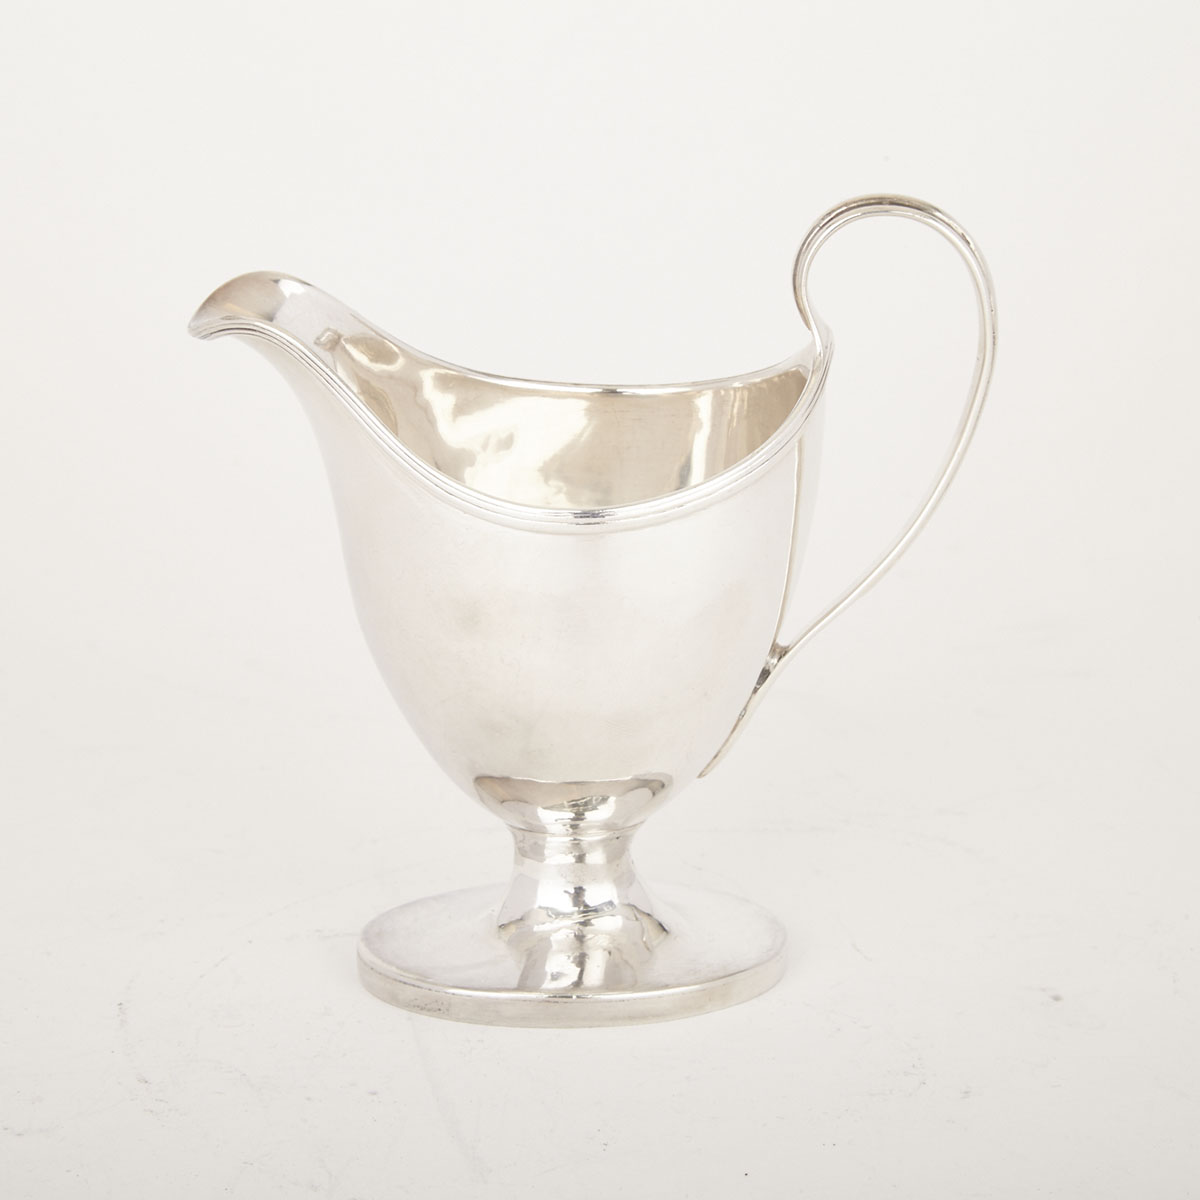 George III Silver Cream Jug, Thomas Meriton, London, 1797